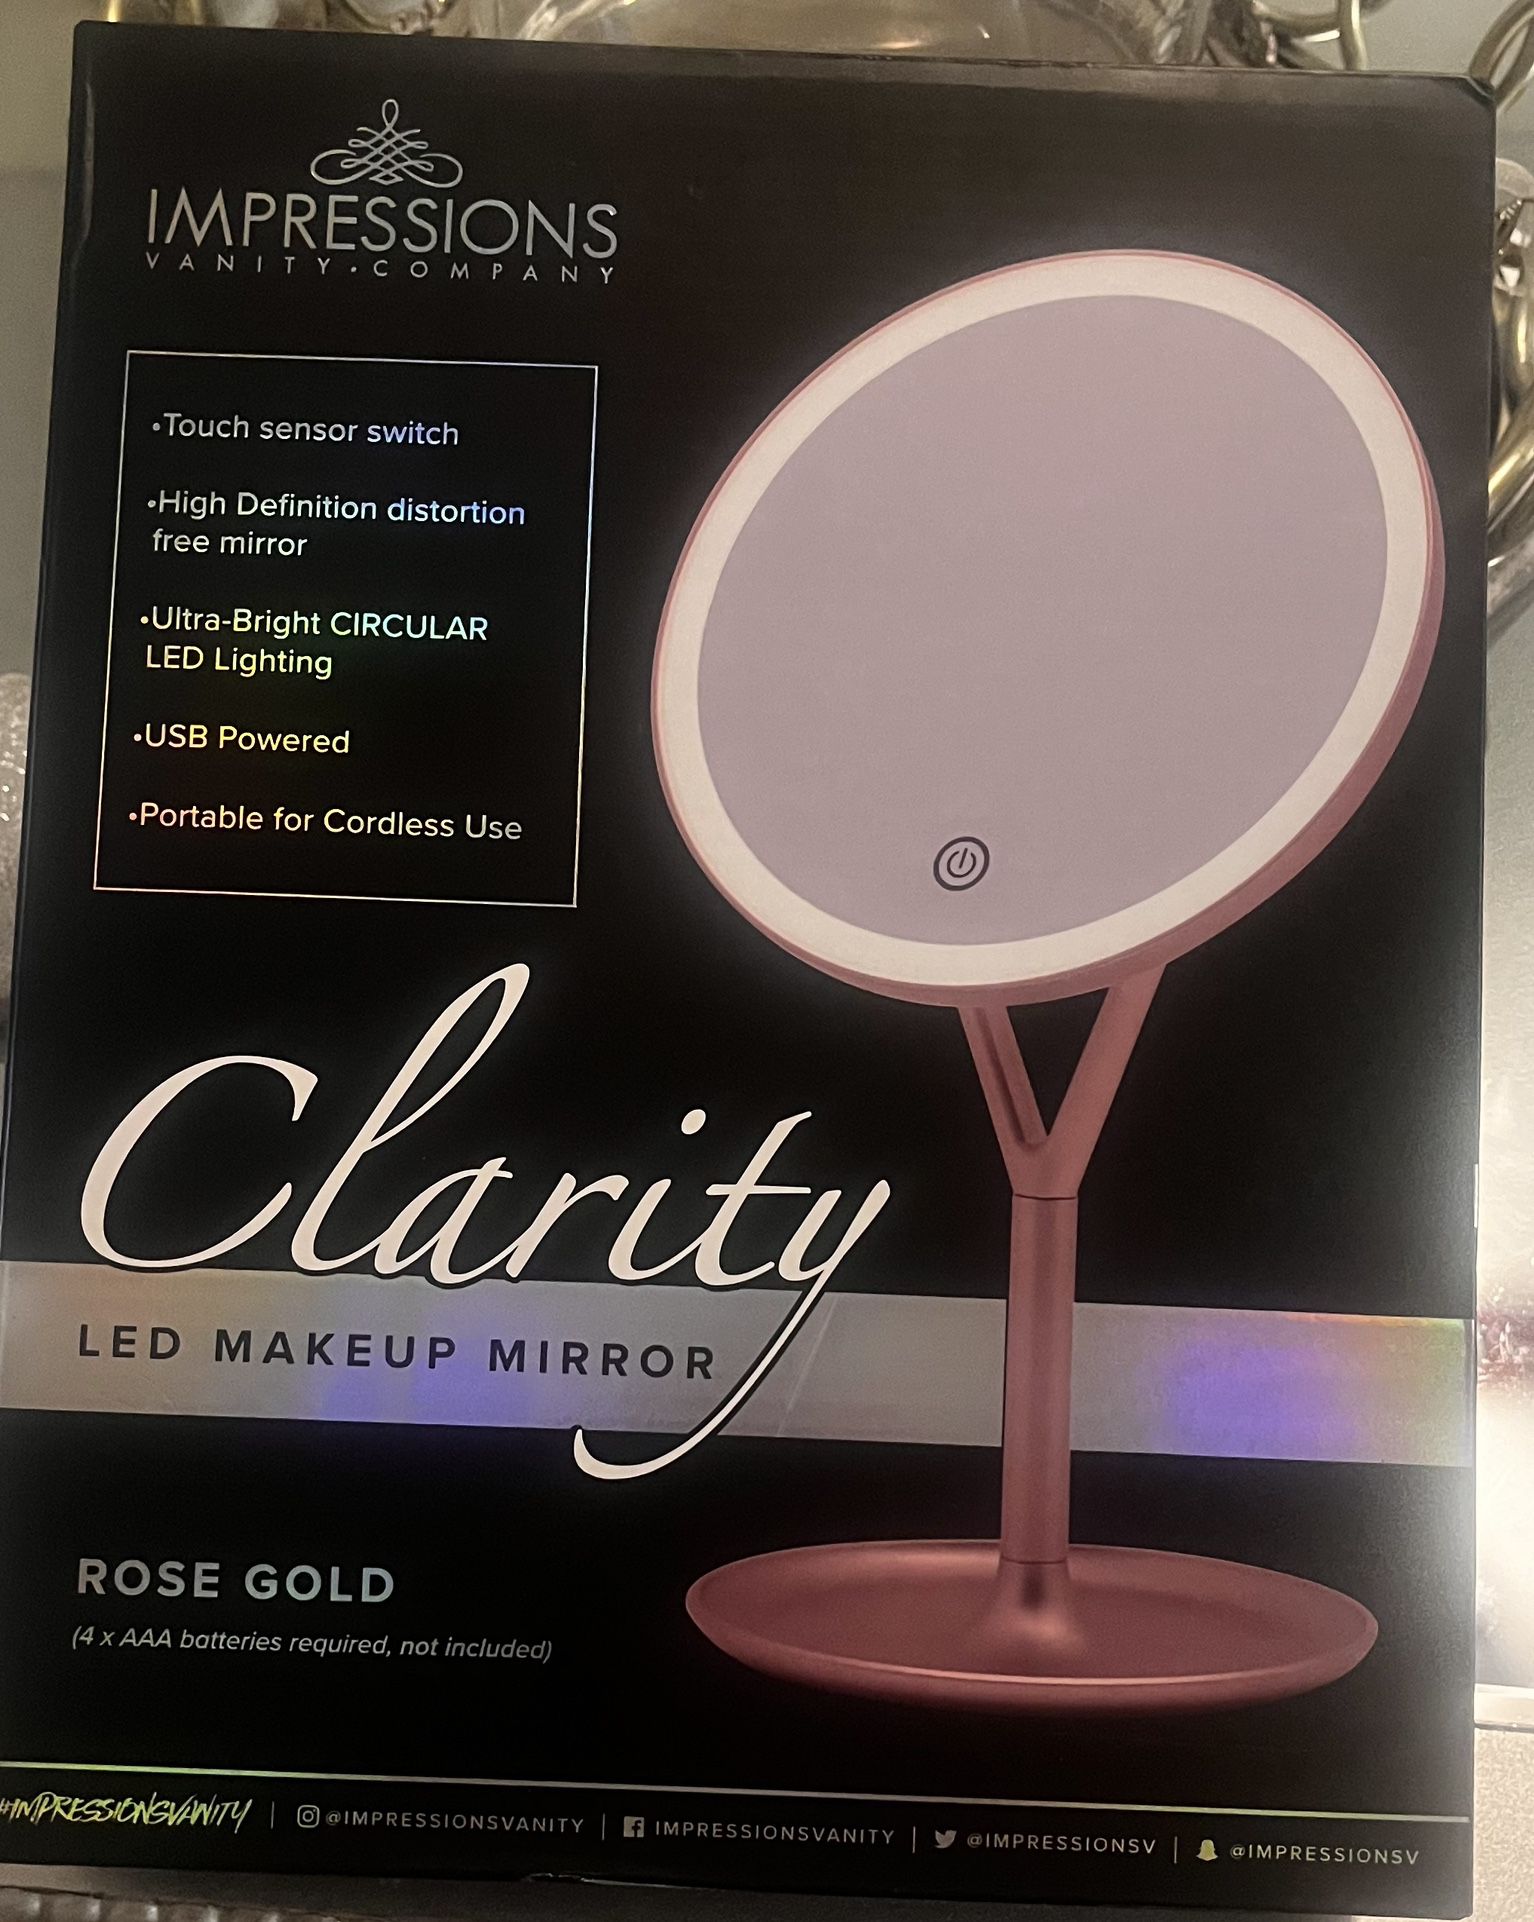 Clarity LED Makeup Mirror